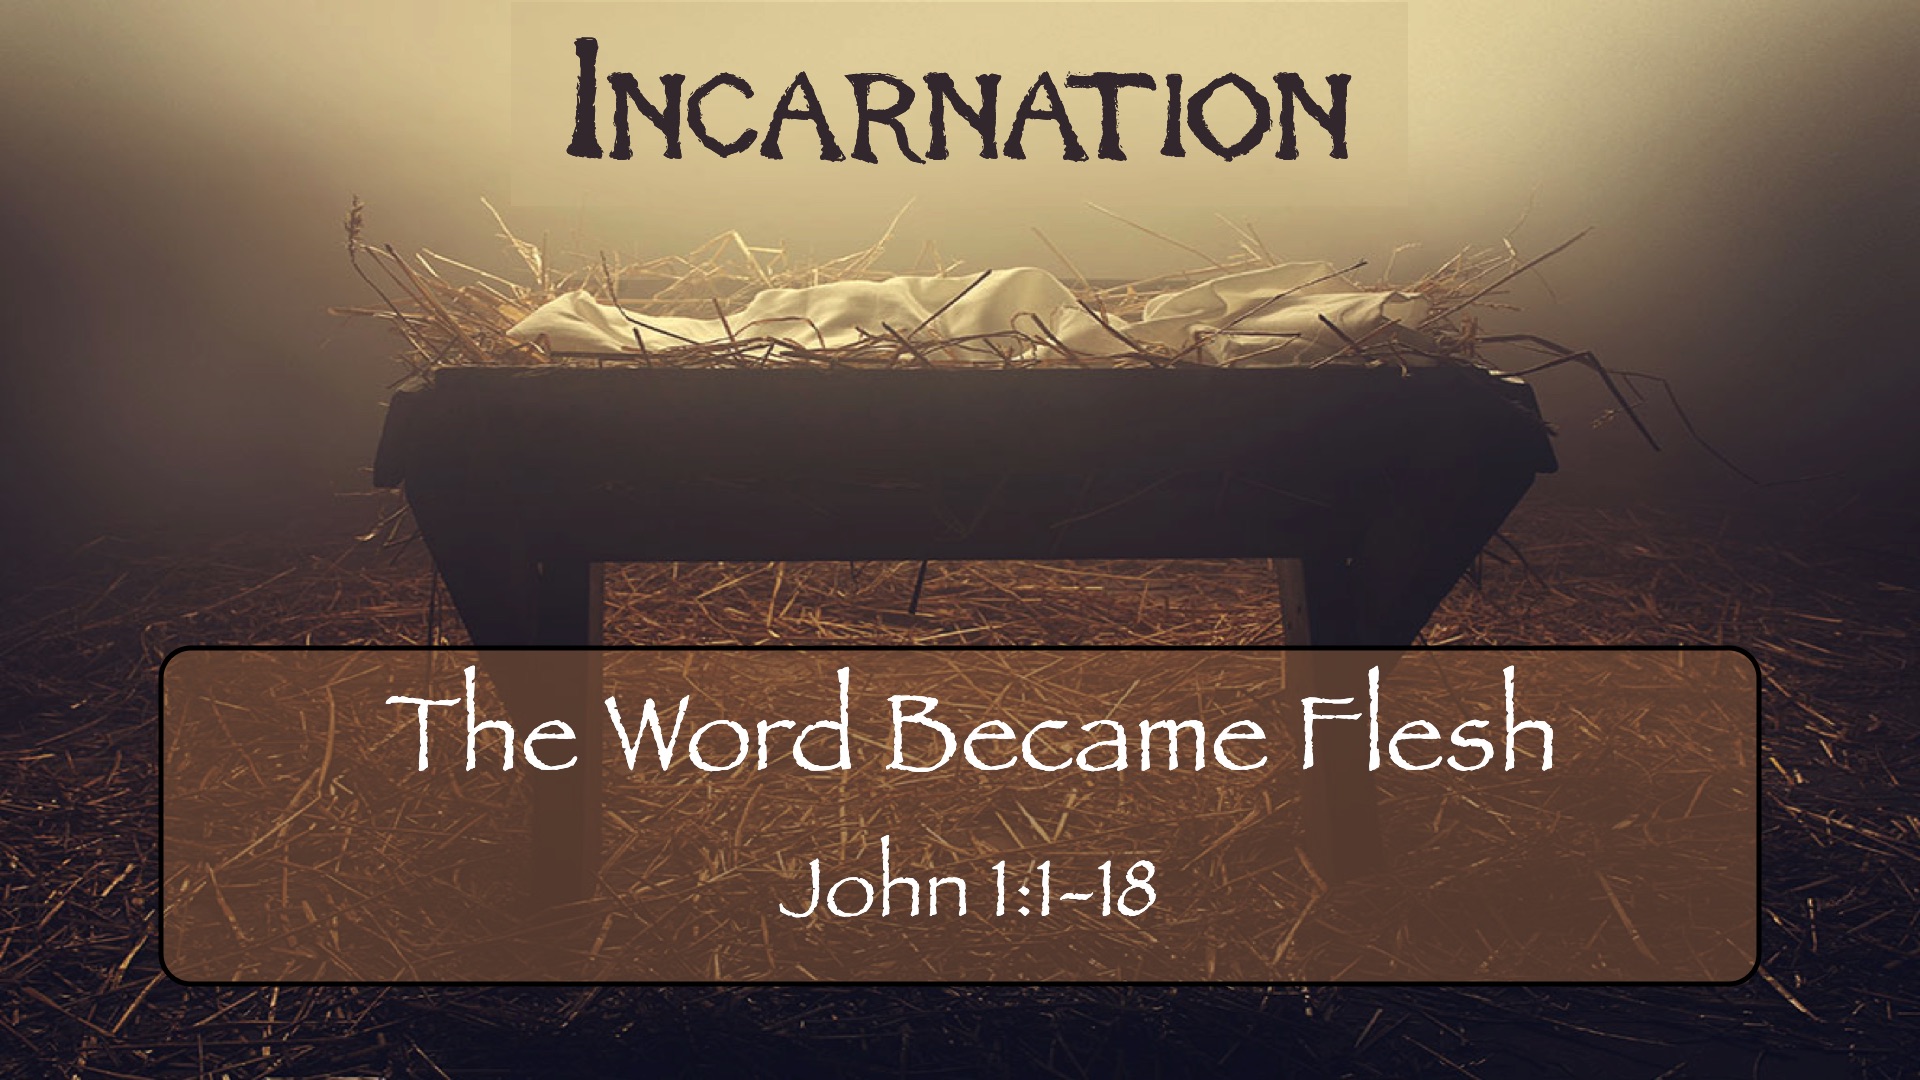 “Incarnation: The Word Became Flesh”